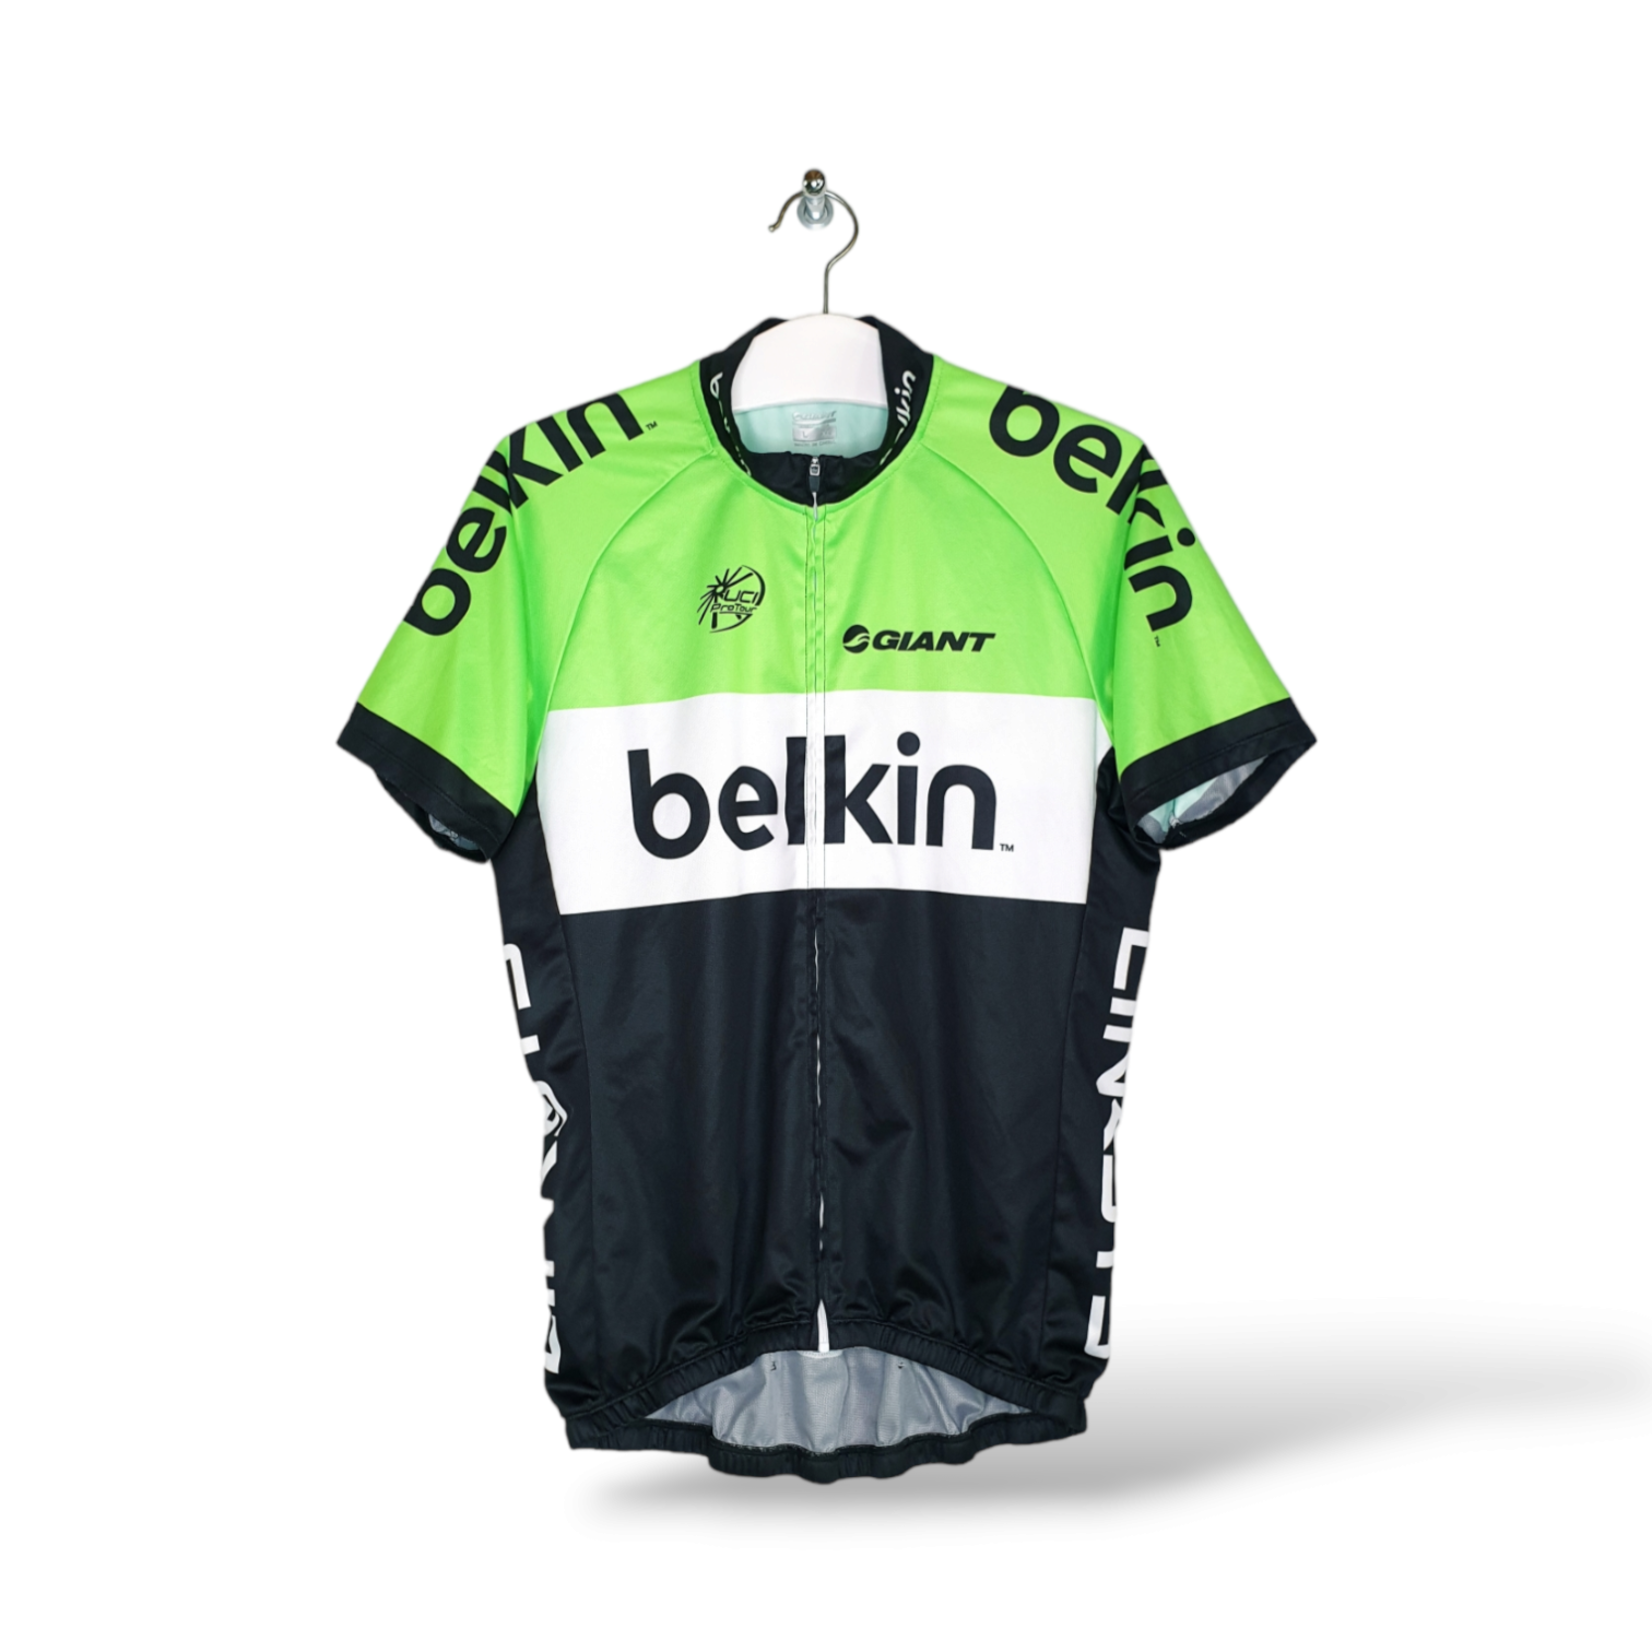 Giant Original Giant vintage cycling jersey Belkin 2013